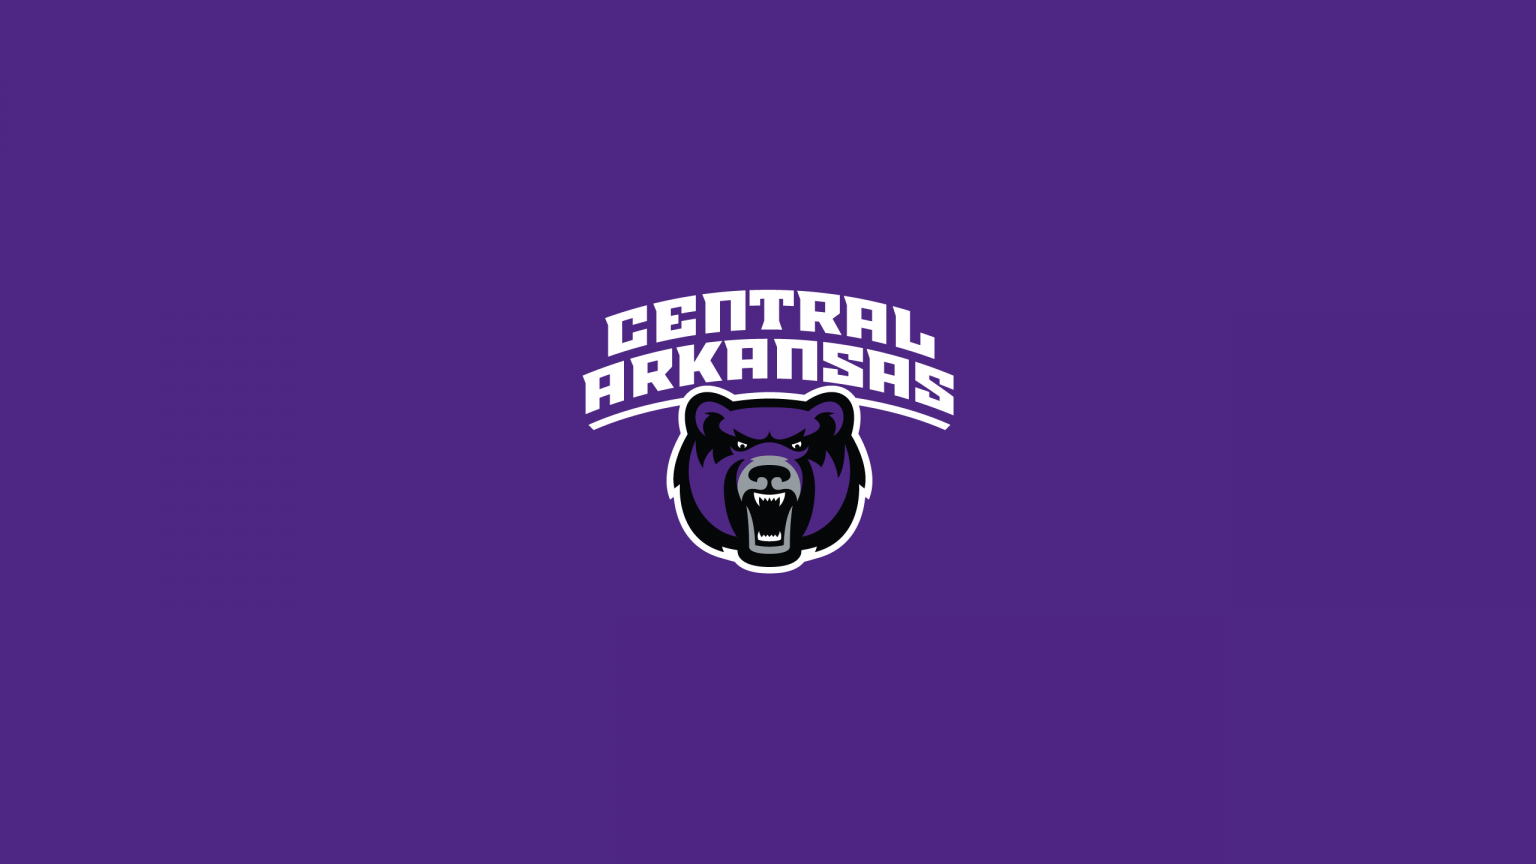 Central Arkansas Bears Basketball - NCAAB - Square Bettor